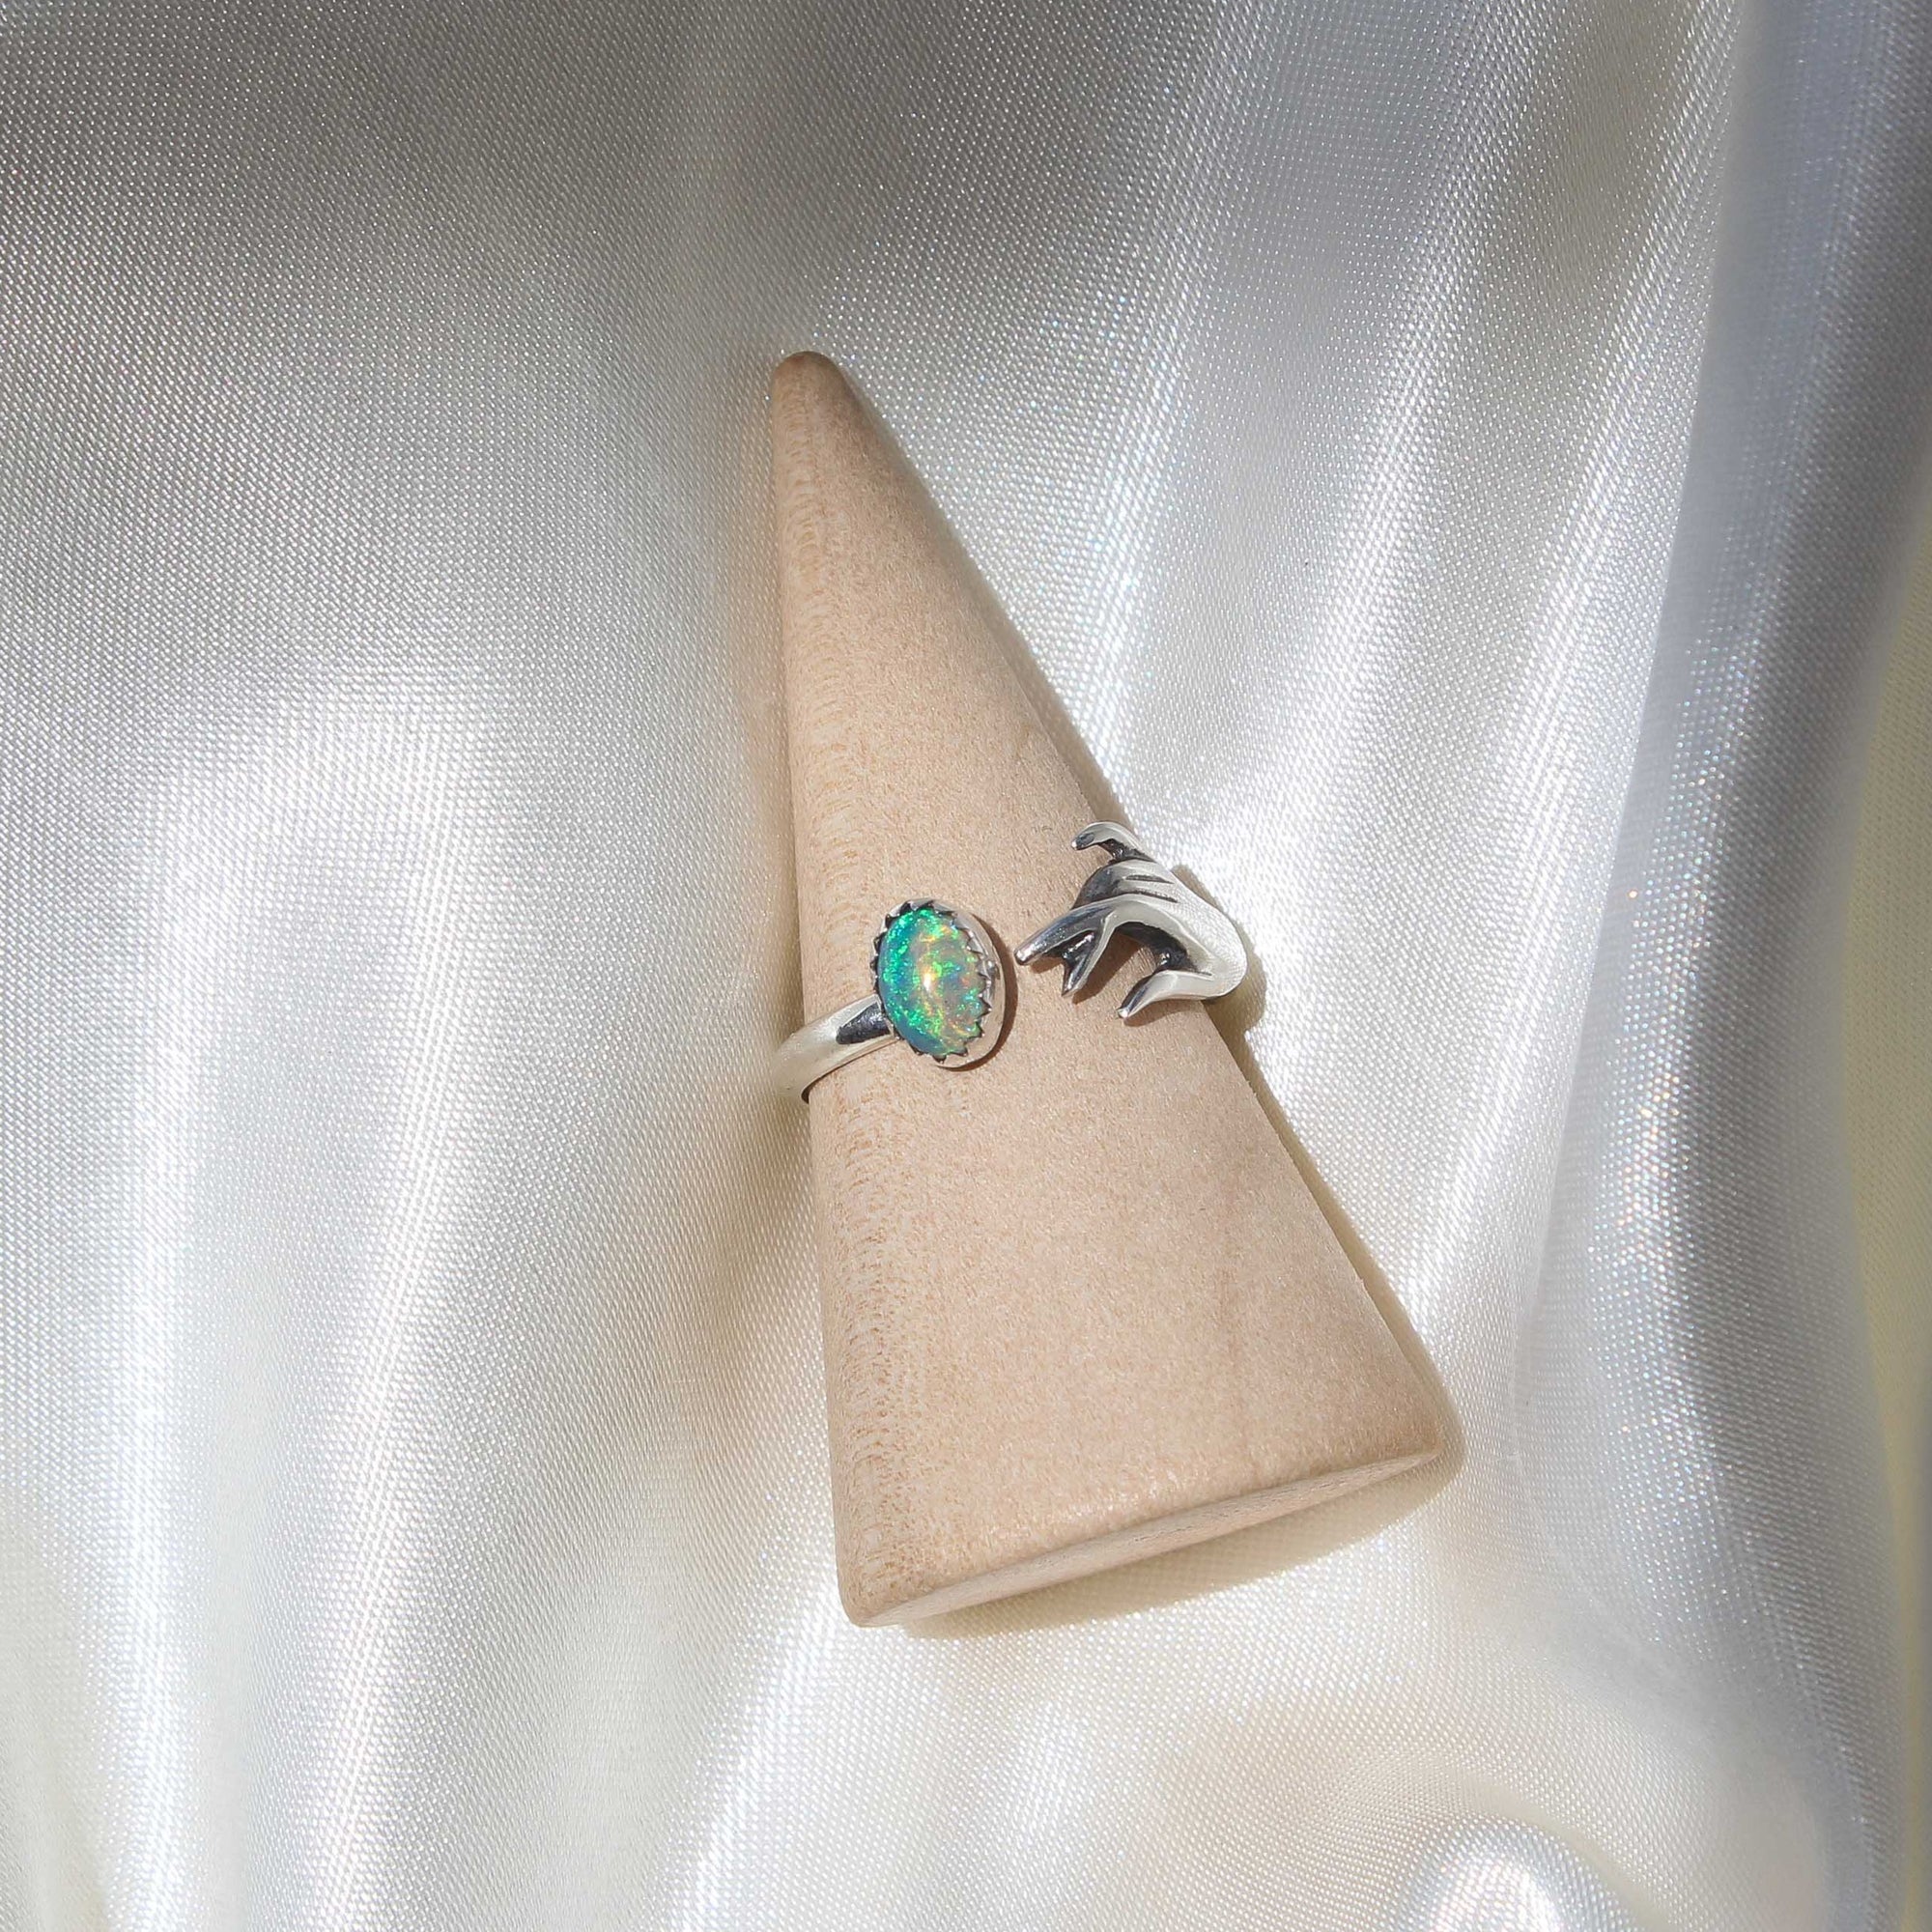 Mini Ethiopian Opal Hand Ring - Adjustable Size 6.5